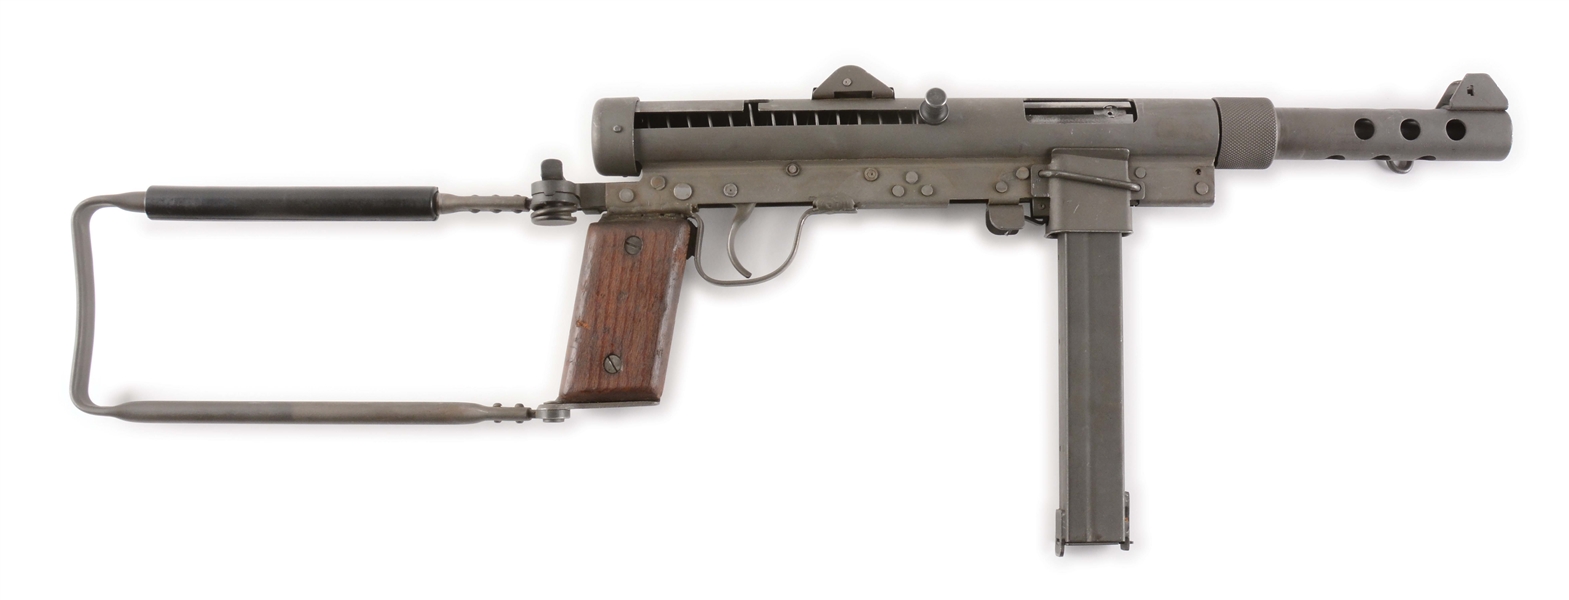 (N) WILSON ARMS CO. CARL GUSTAF M-45 SUBMACHINE-GUN (FULLY TRANSFERABLE).